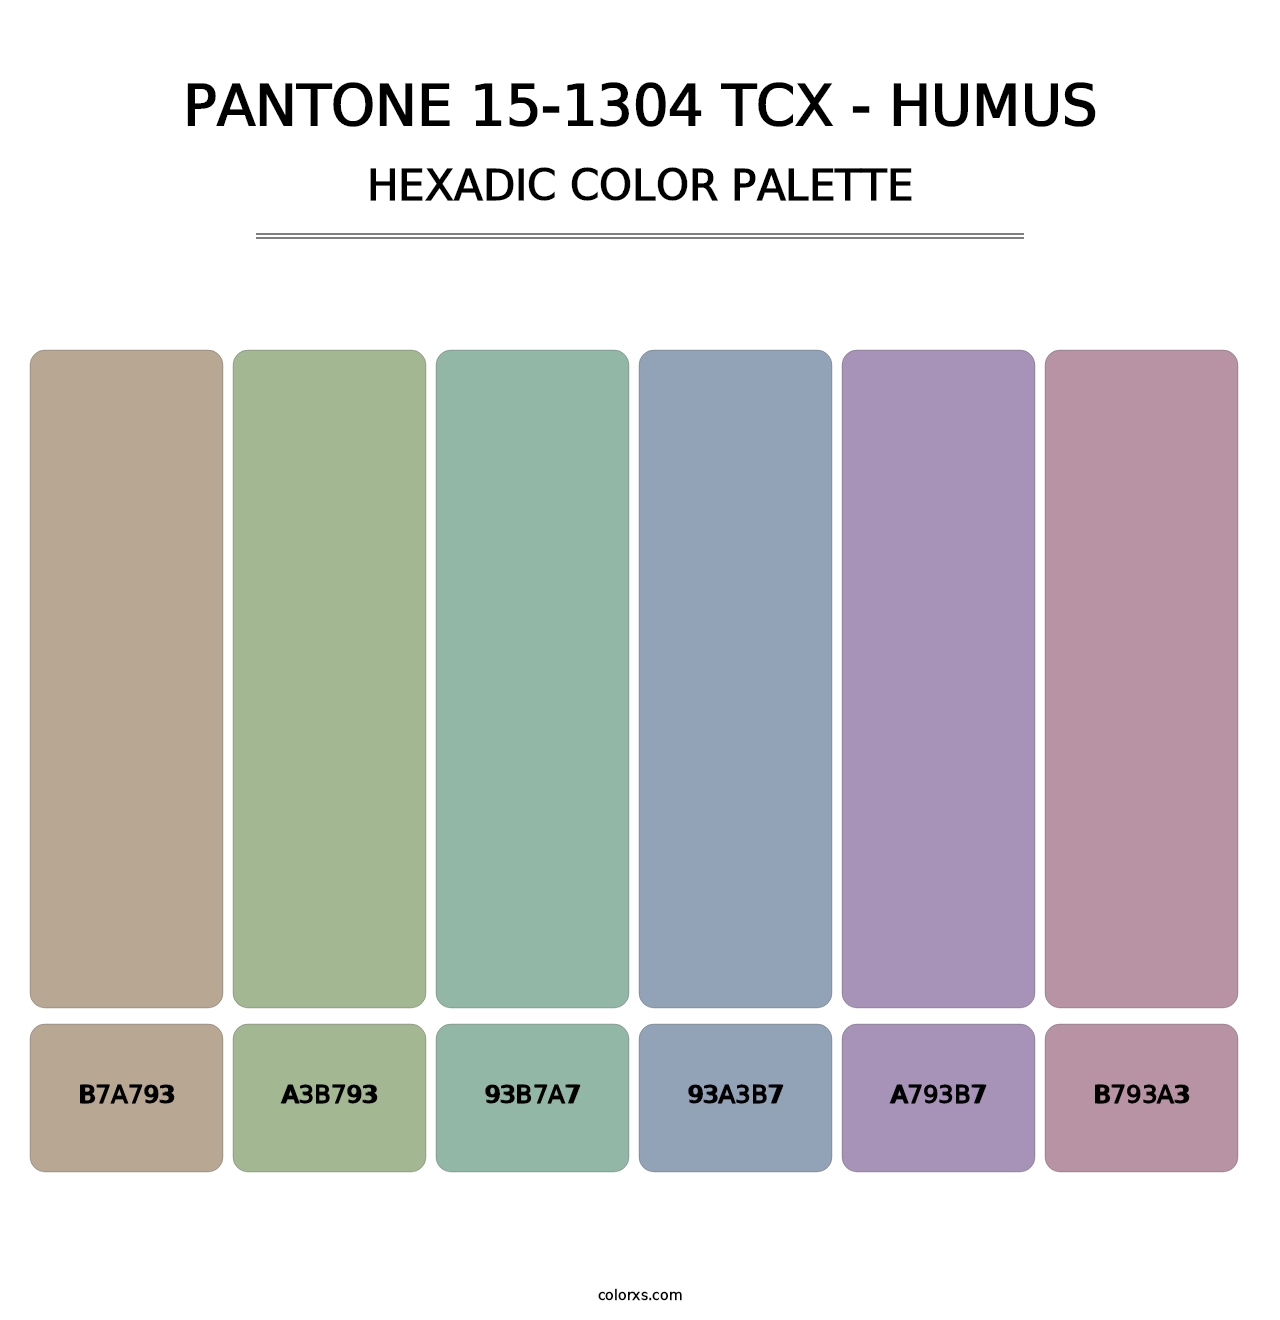 PANTONE 15-1304 TCX - Humus - Hexadic Color Palette